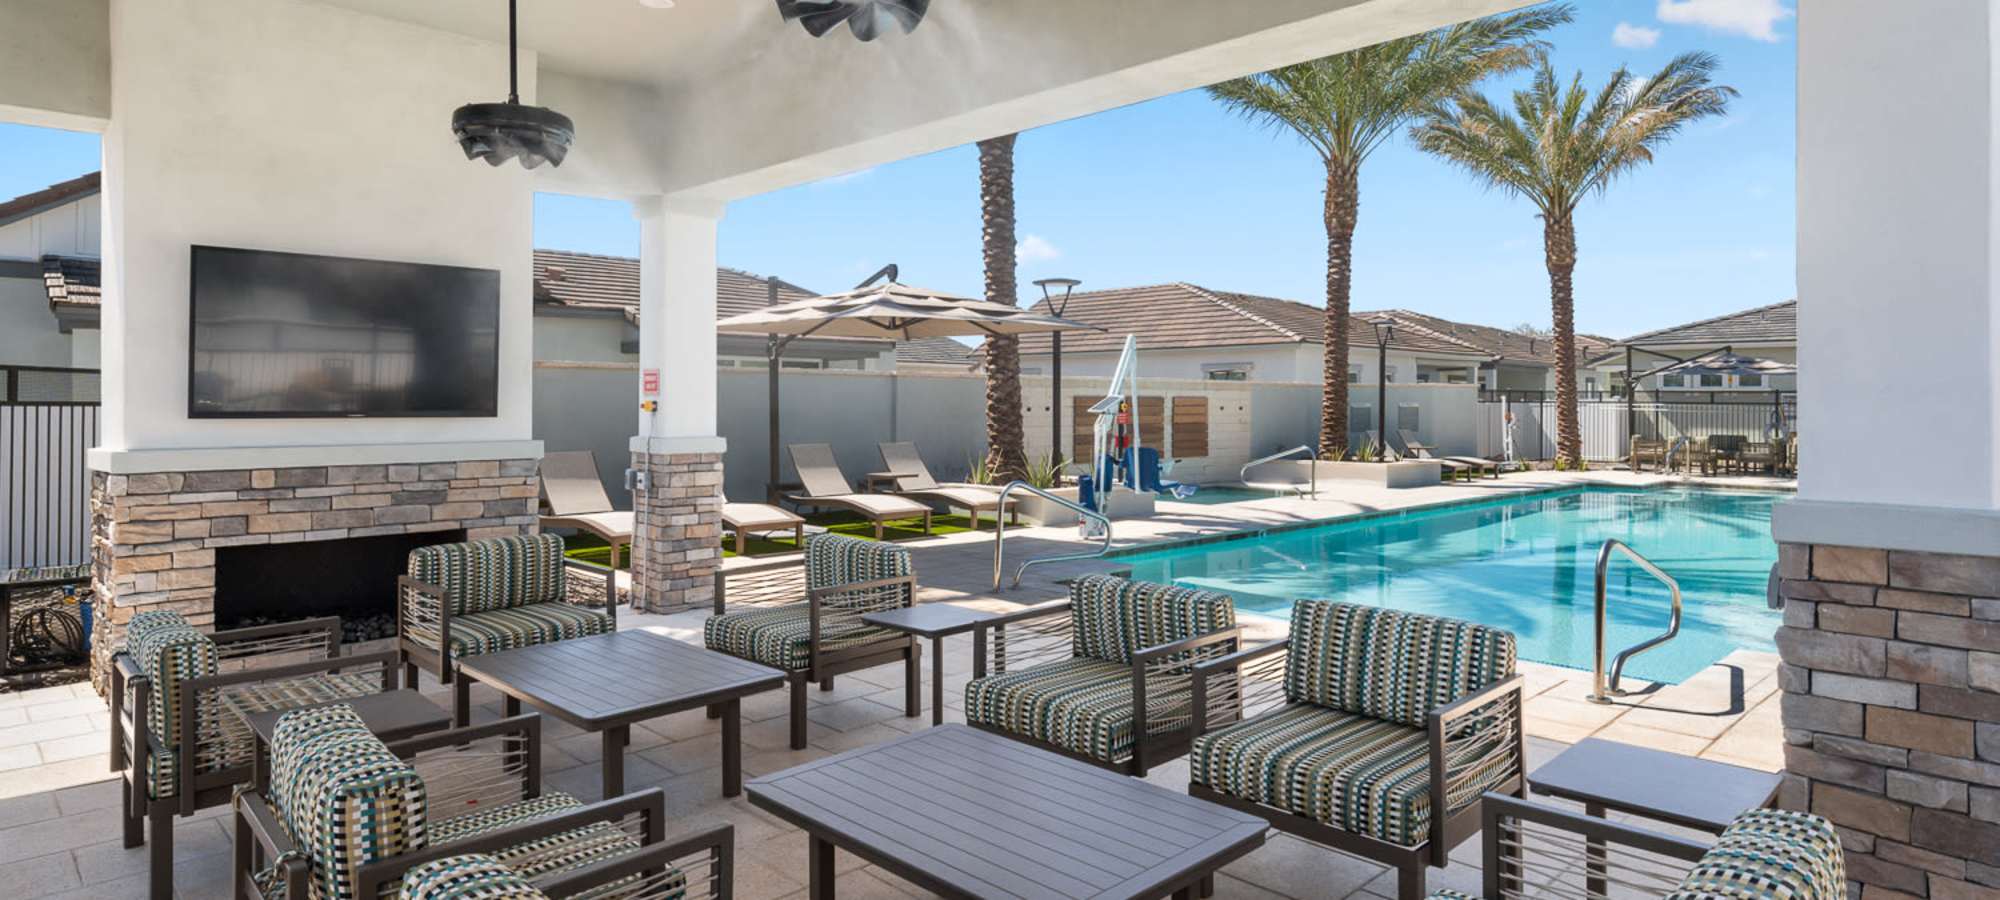 Enjoy apartments with garages at Sobremesa Villas in Surprise, Arizona